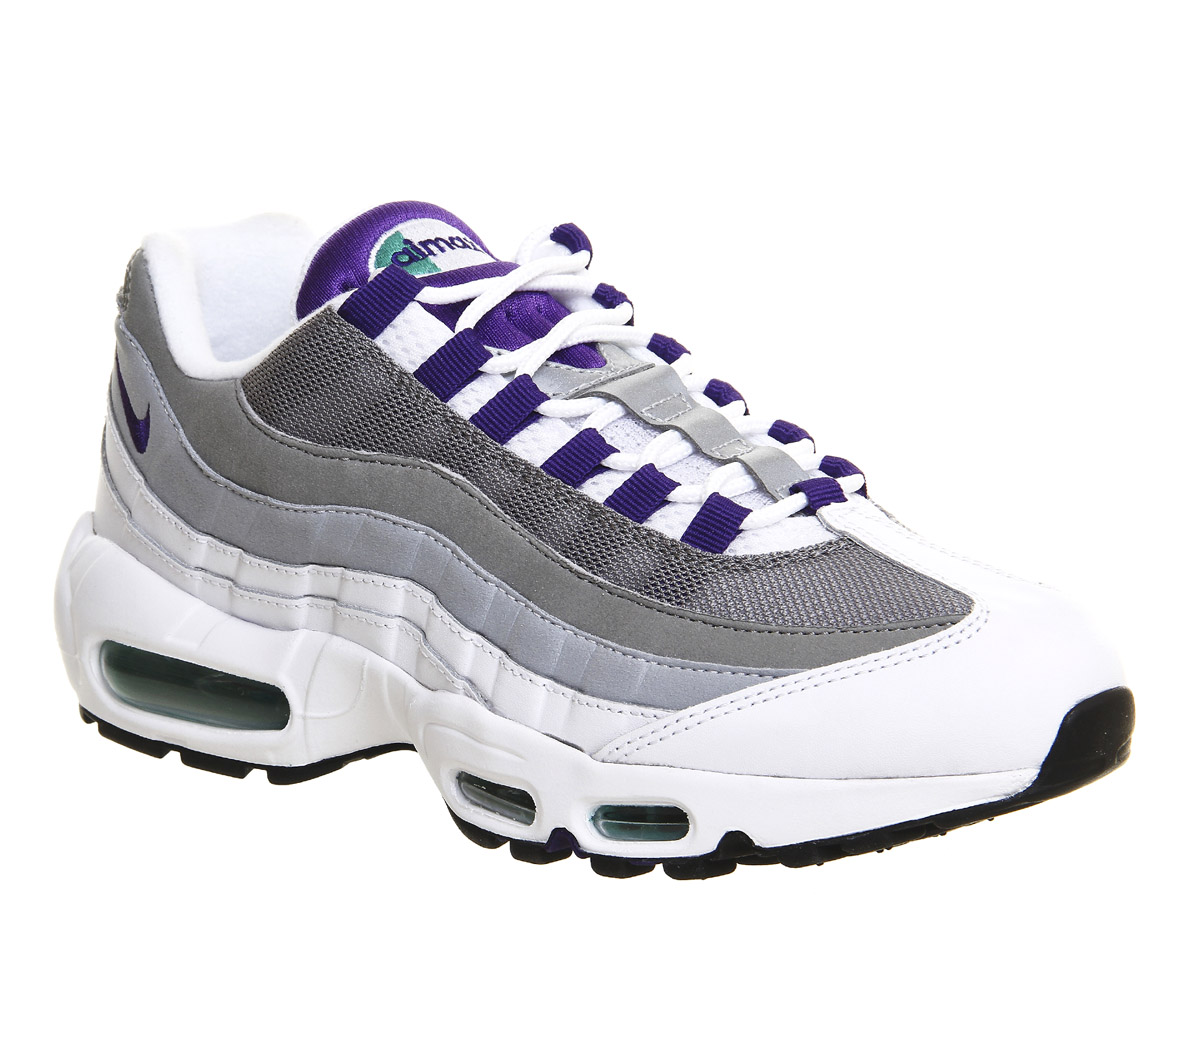 grey and purple air max 95